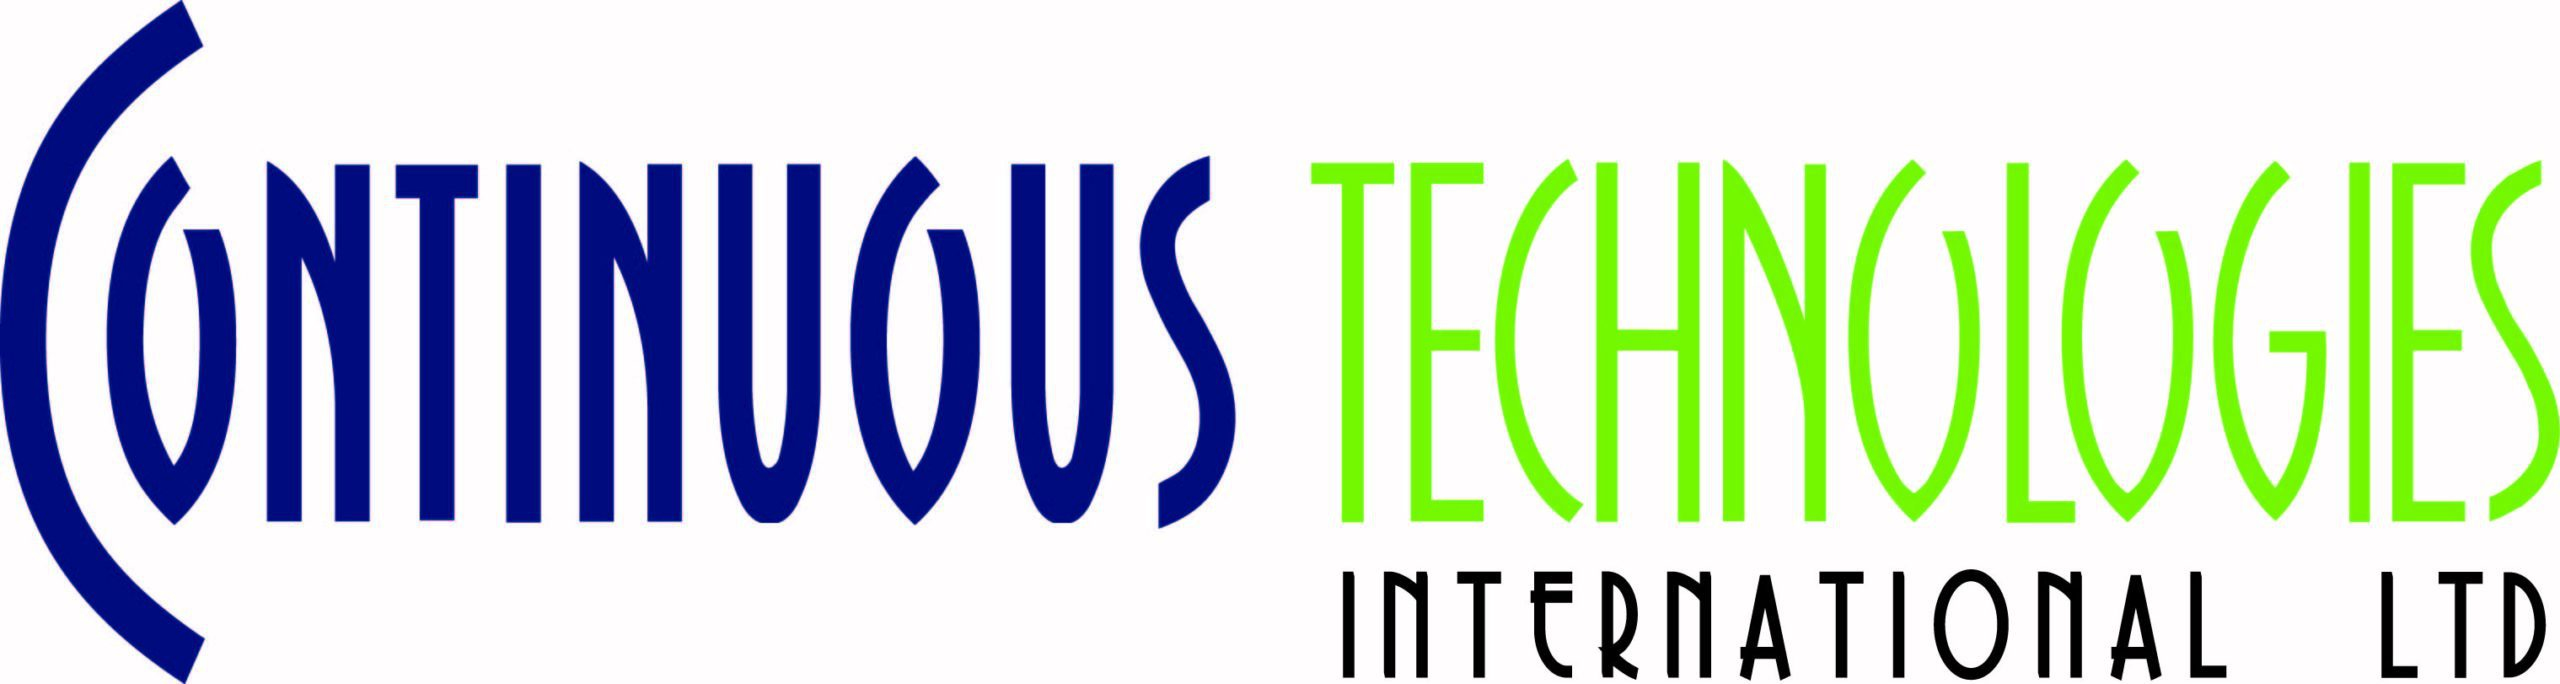 Continuous Technologies International Ltd